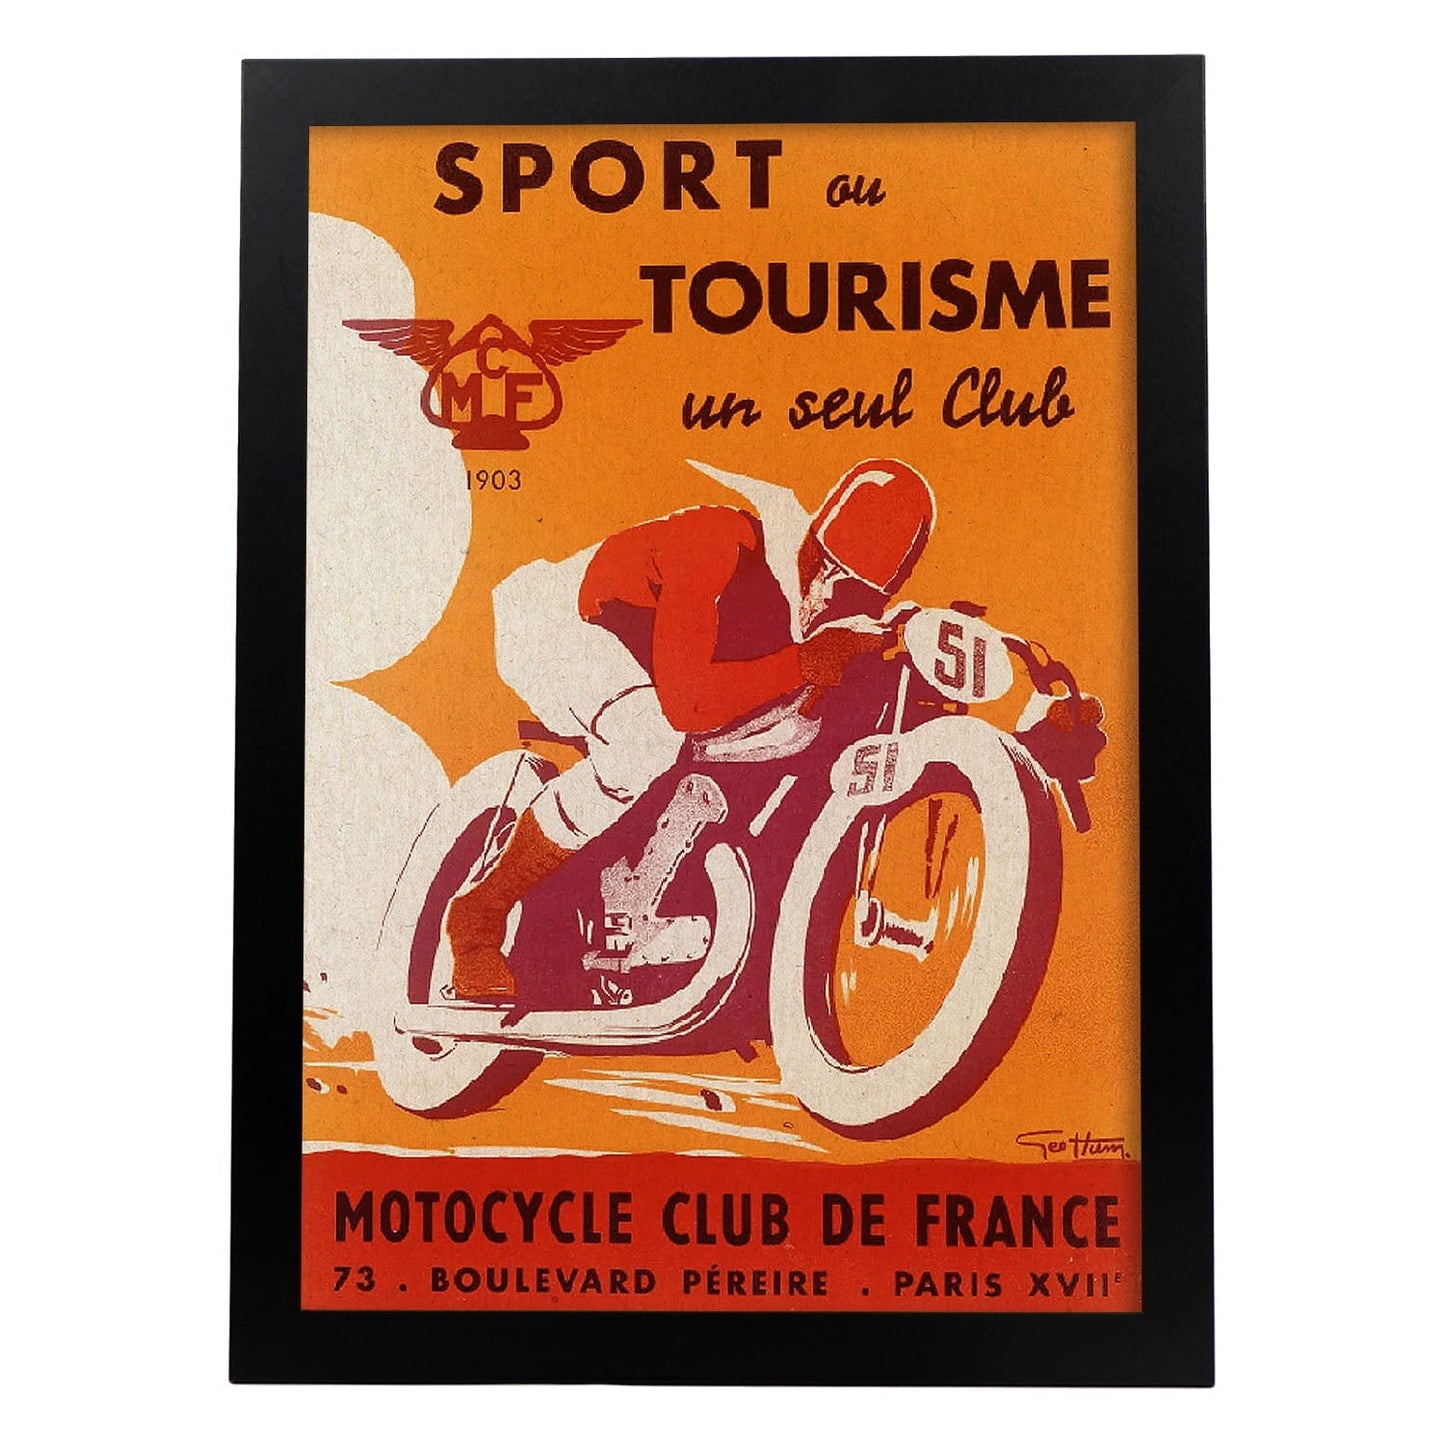 Poster vintage. Anuncio vintage del Sport ou Tourisme un seul Club Motorcycle Club de France.-Artwork-Nacnic-A4-Marco Negro-Nacnic Estudio SL